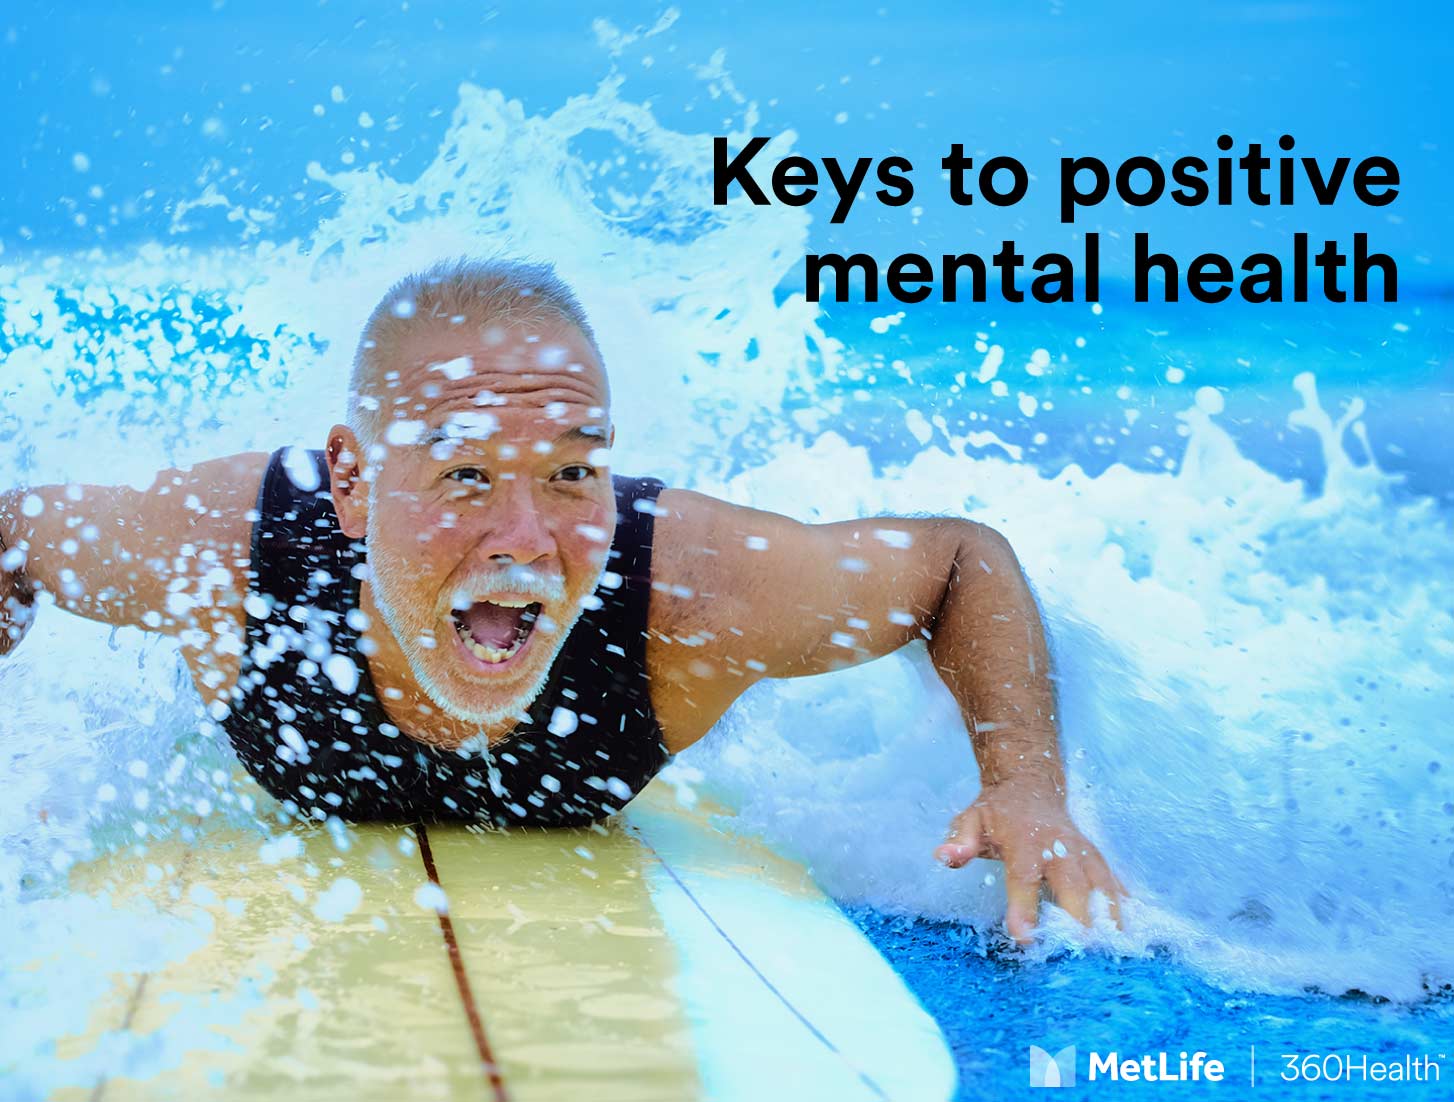 The keys to positive mental health